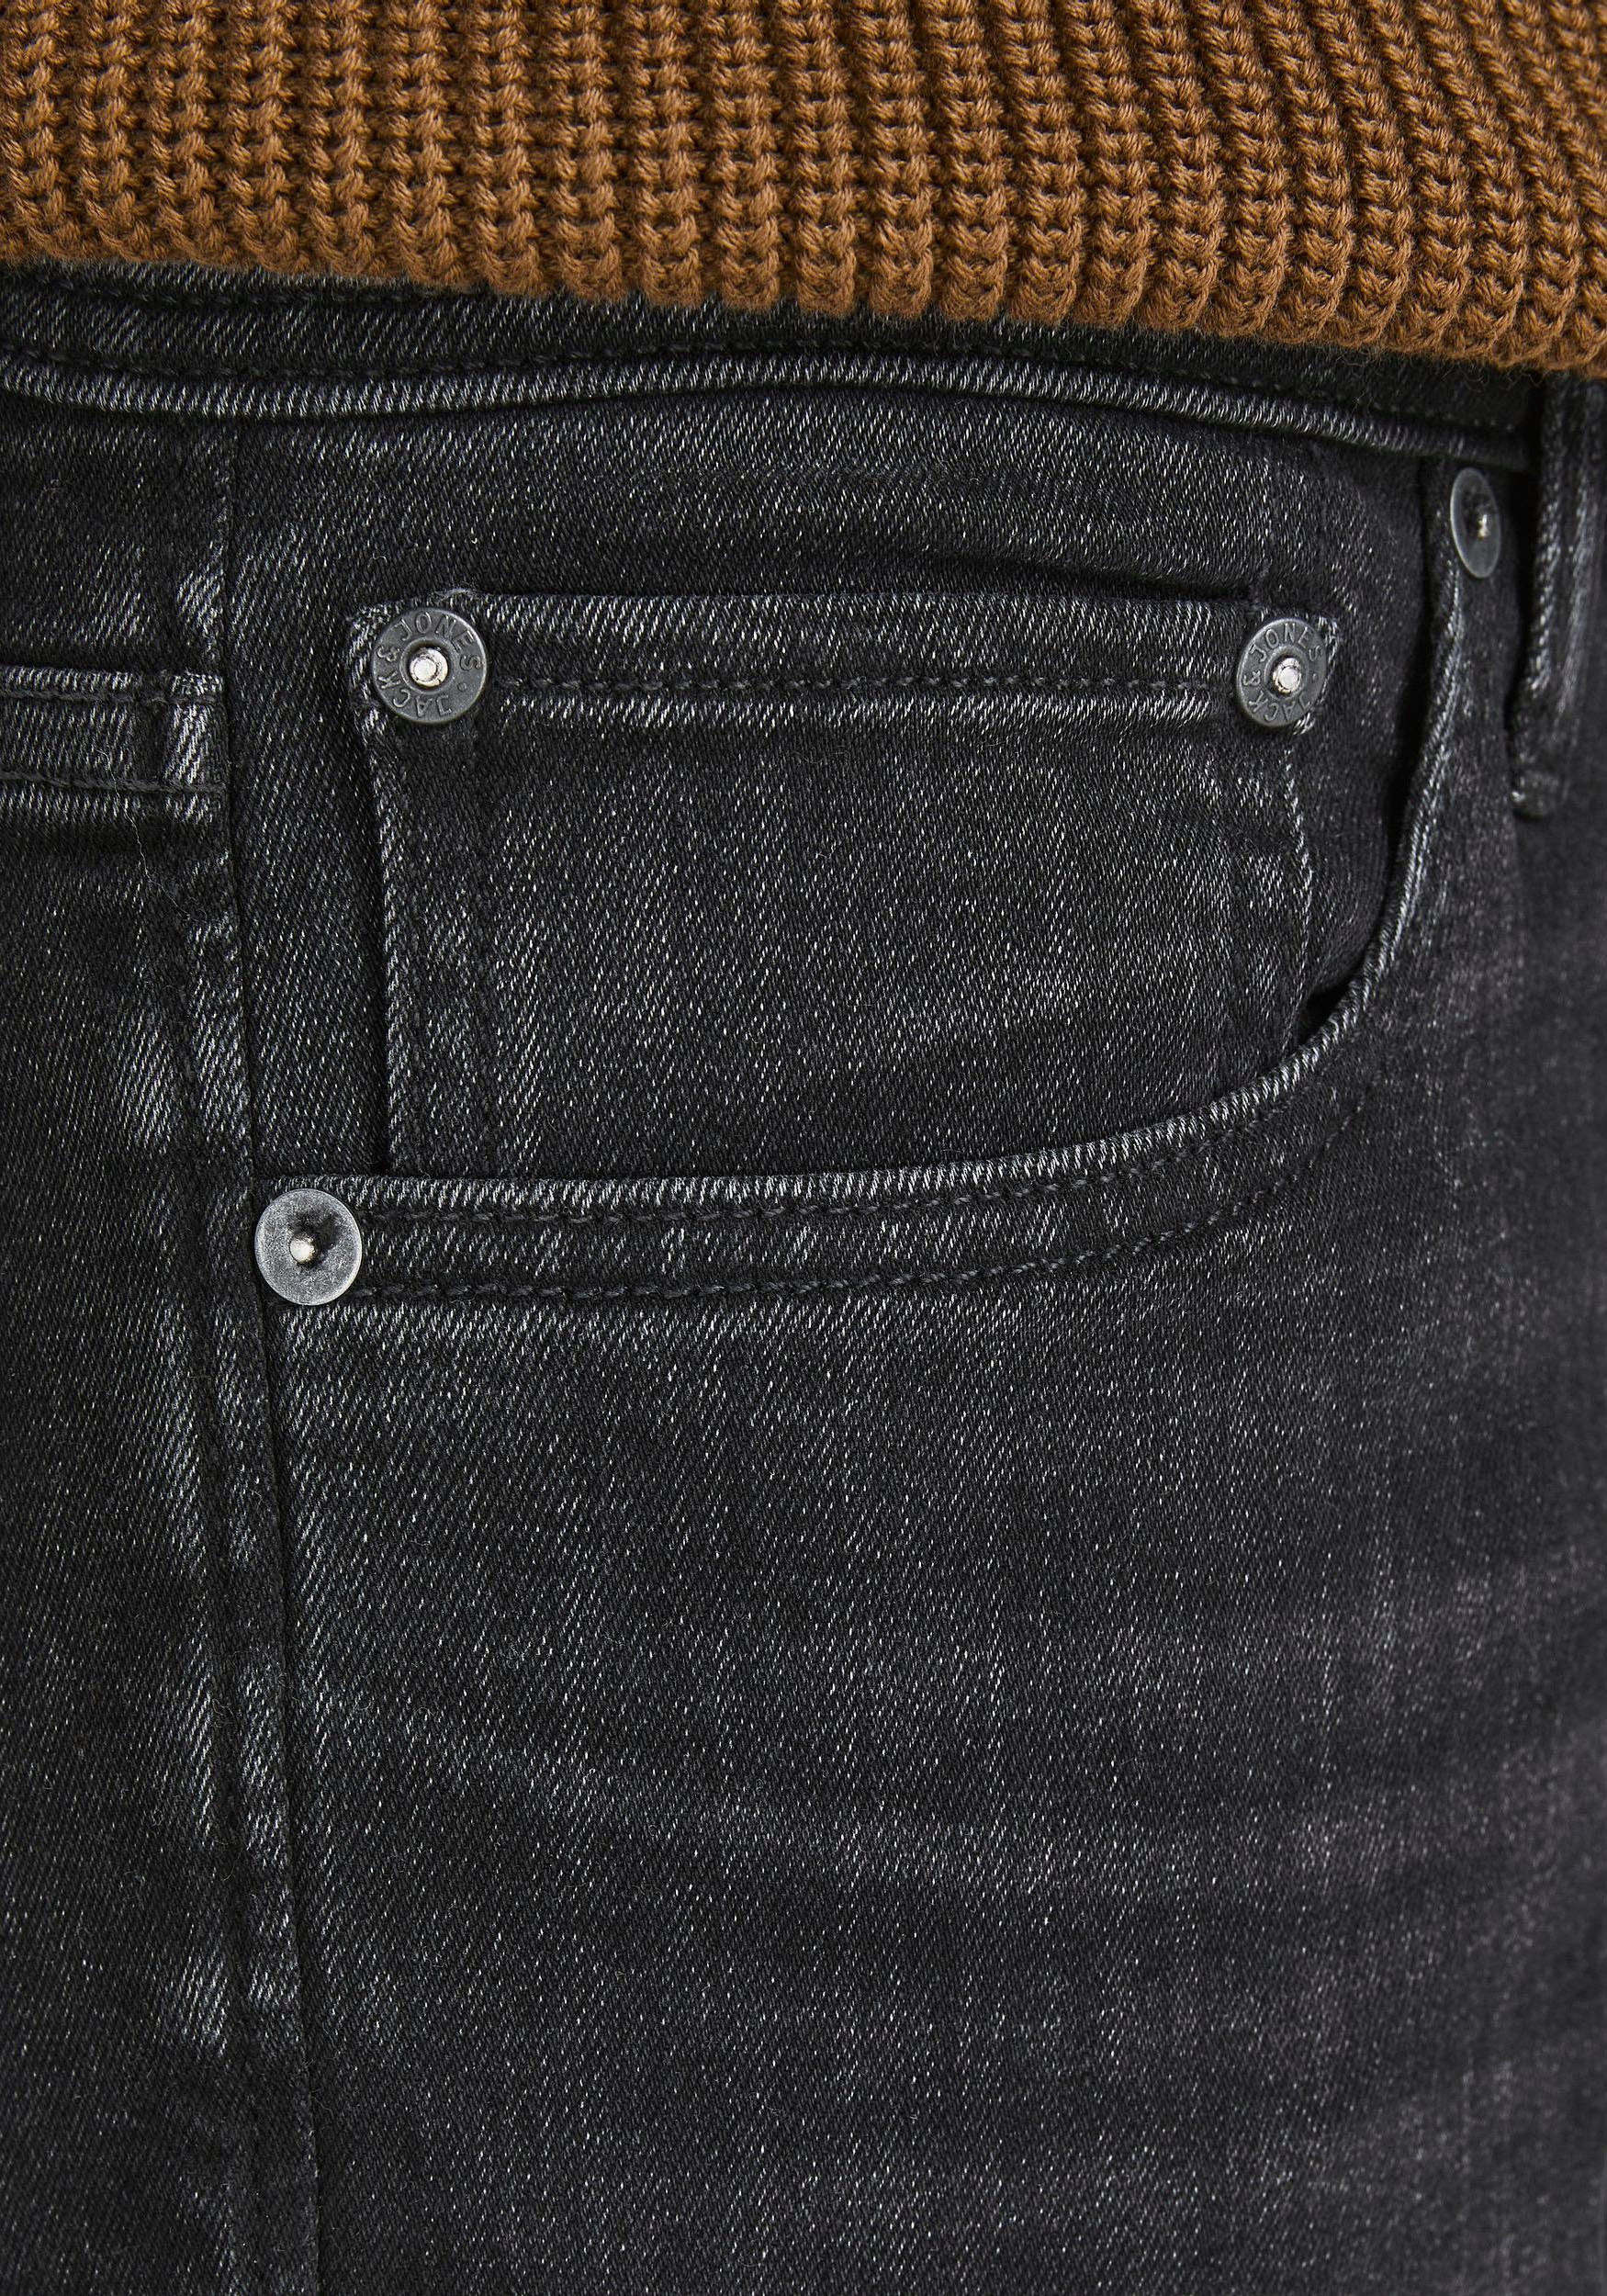 Jack & Jones Comfort-fit-Jeans black-denim MIKE